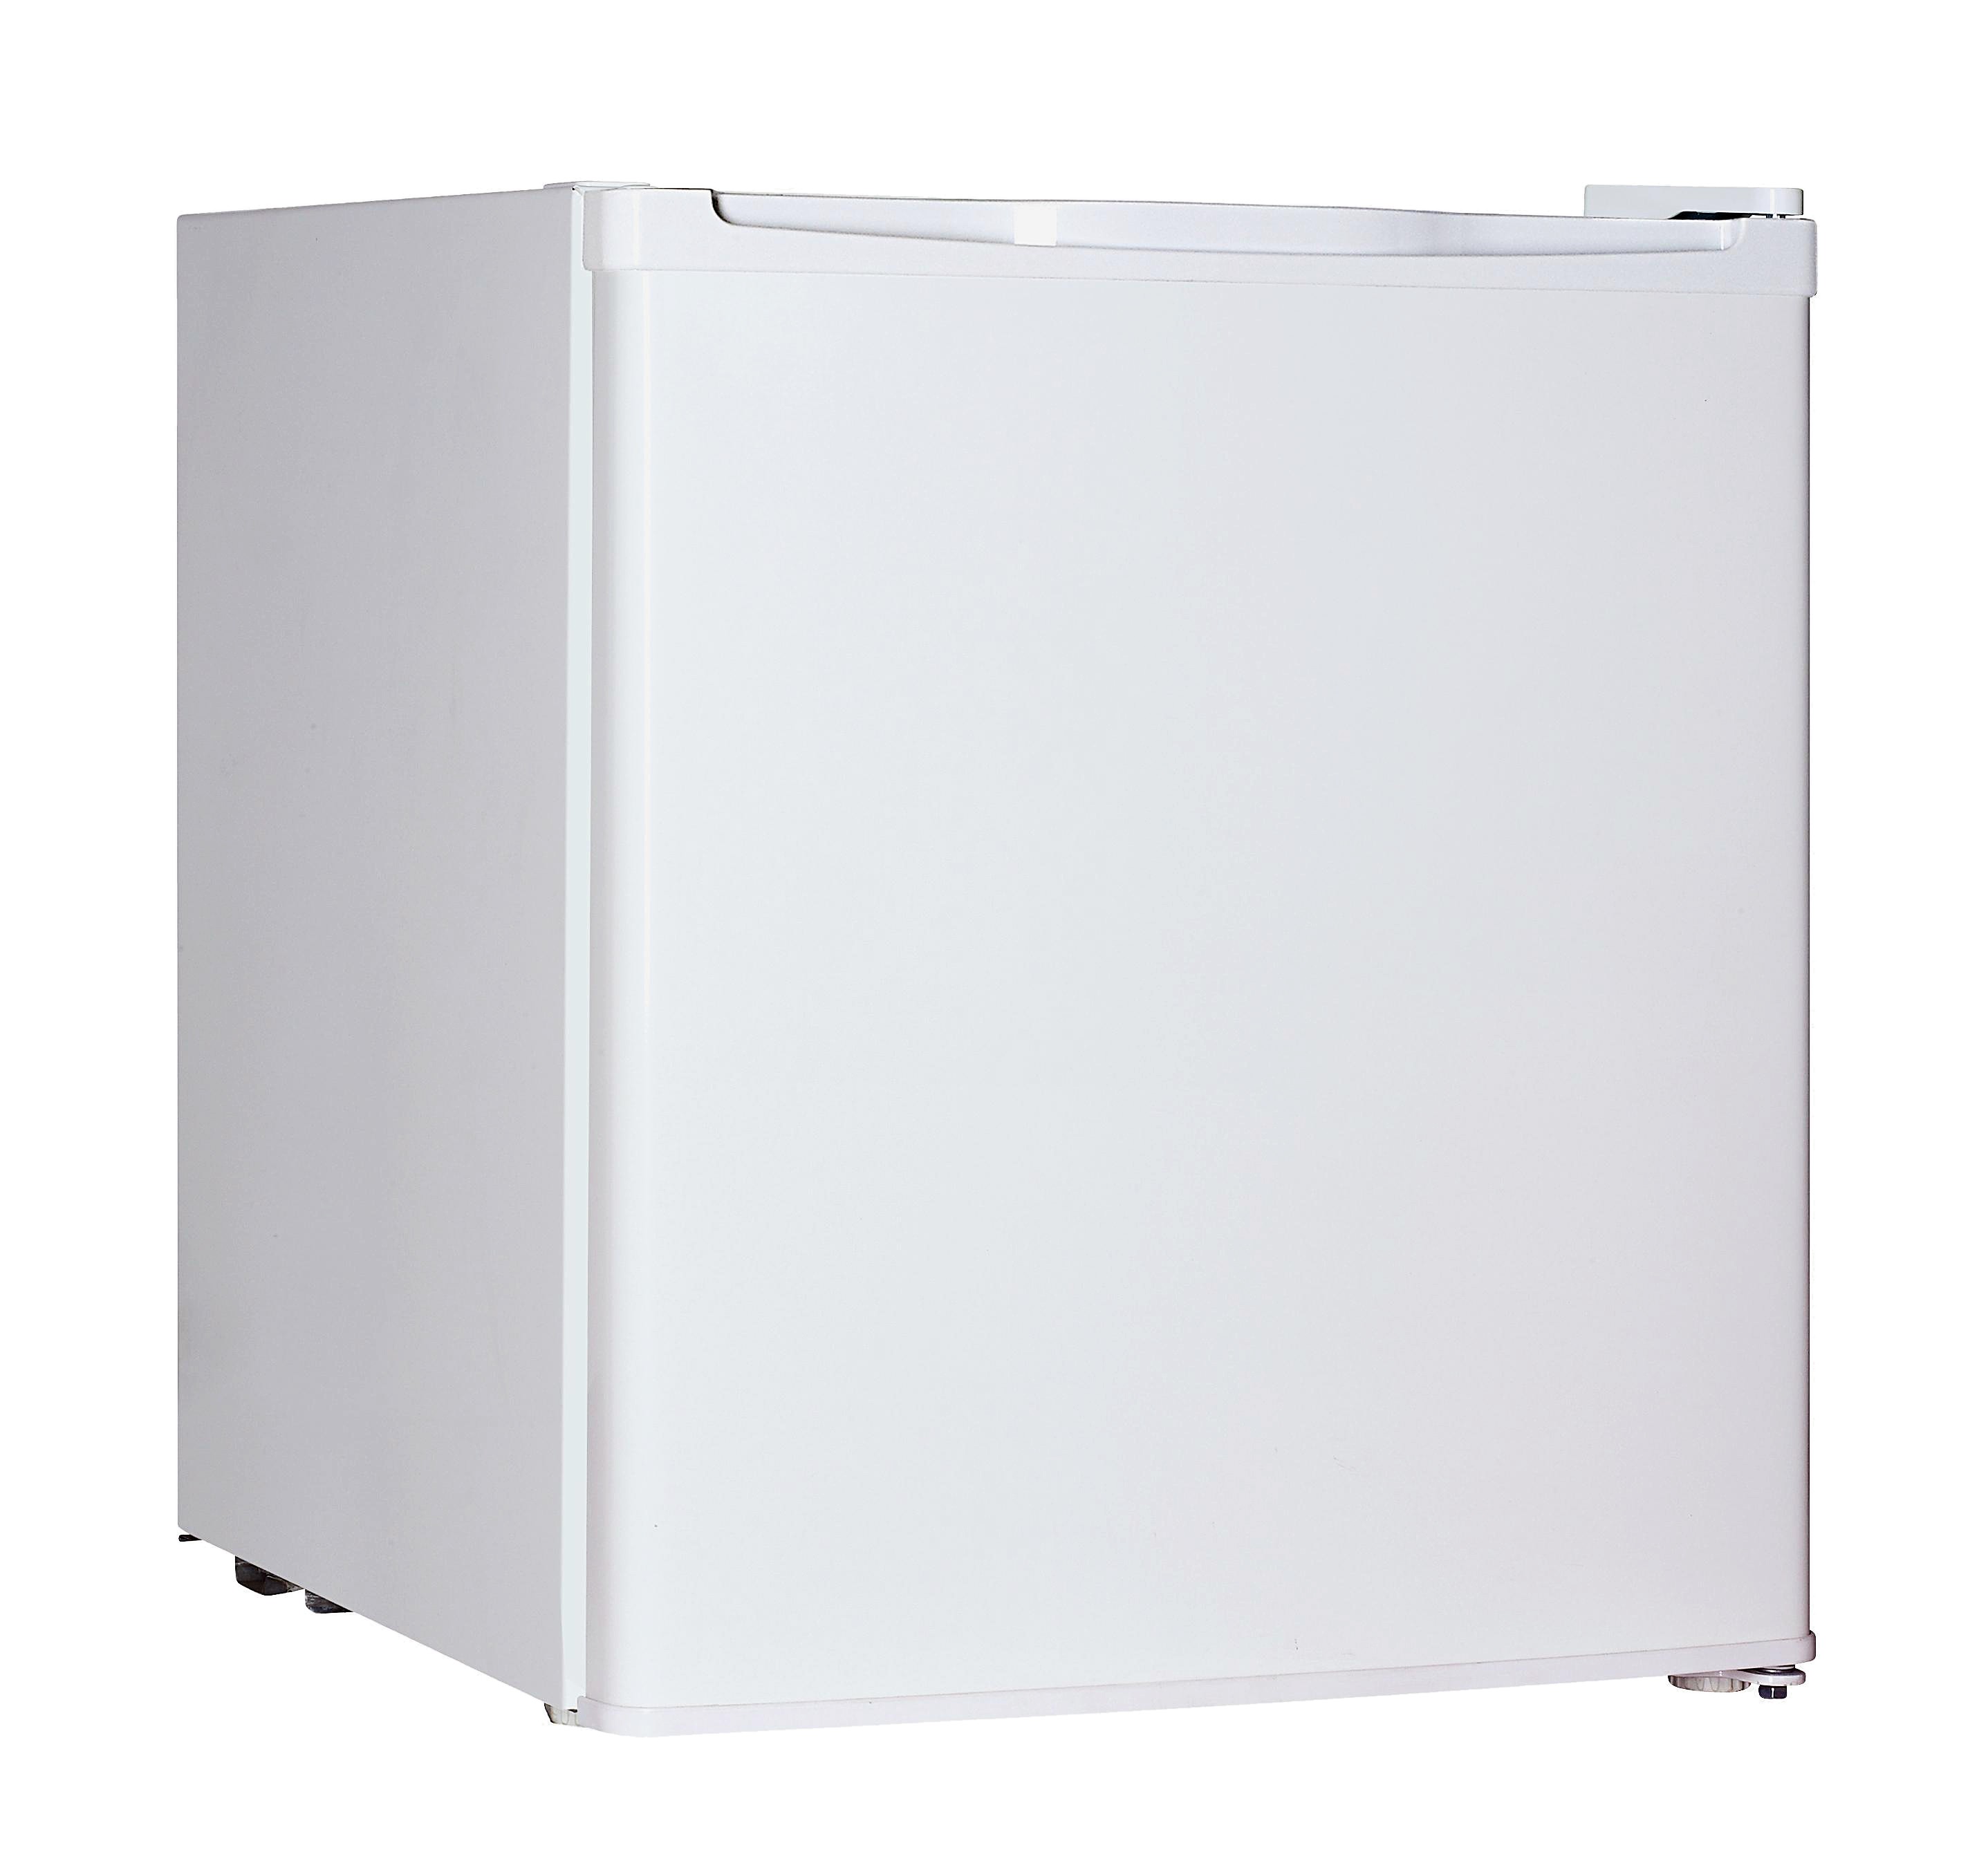 Matsui kjøleskap mtt50w12e (51 cm)